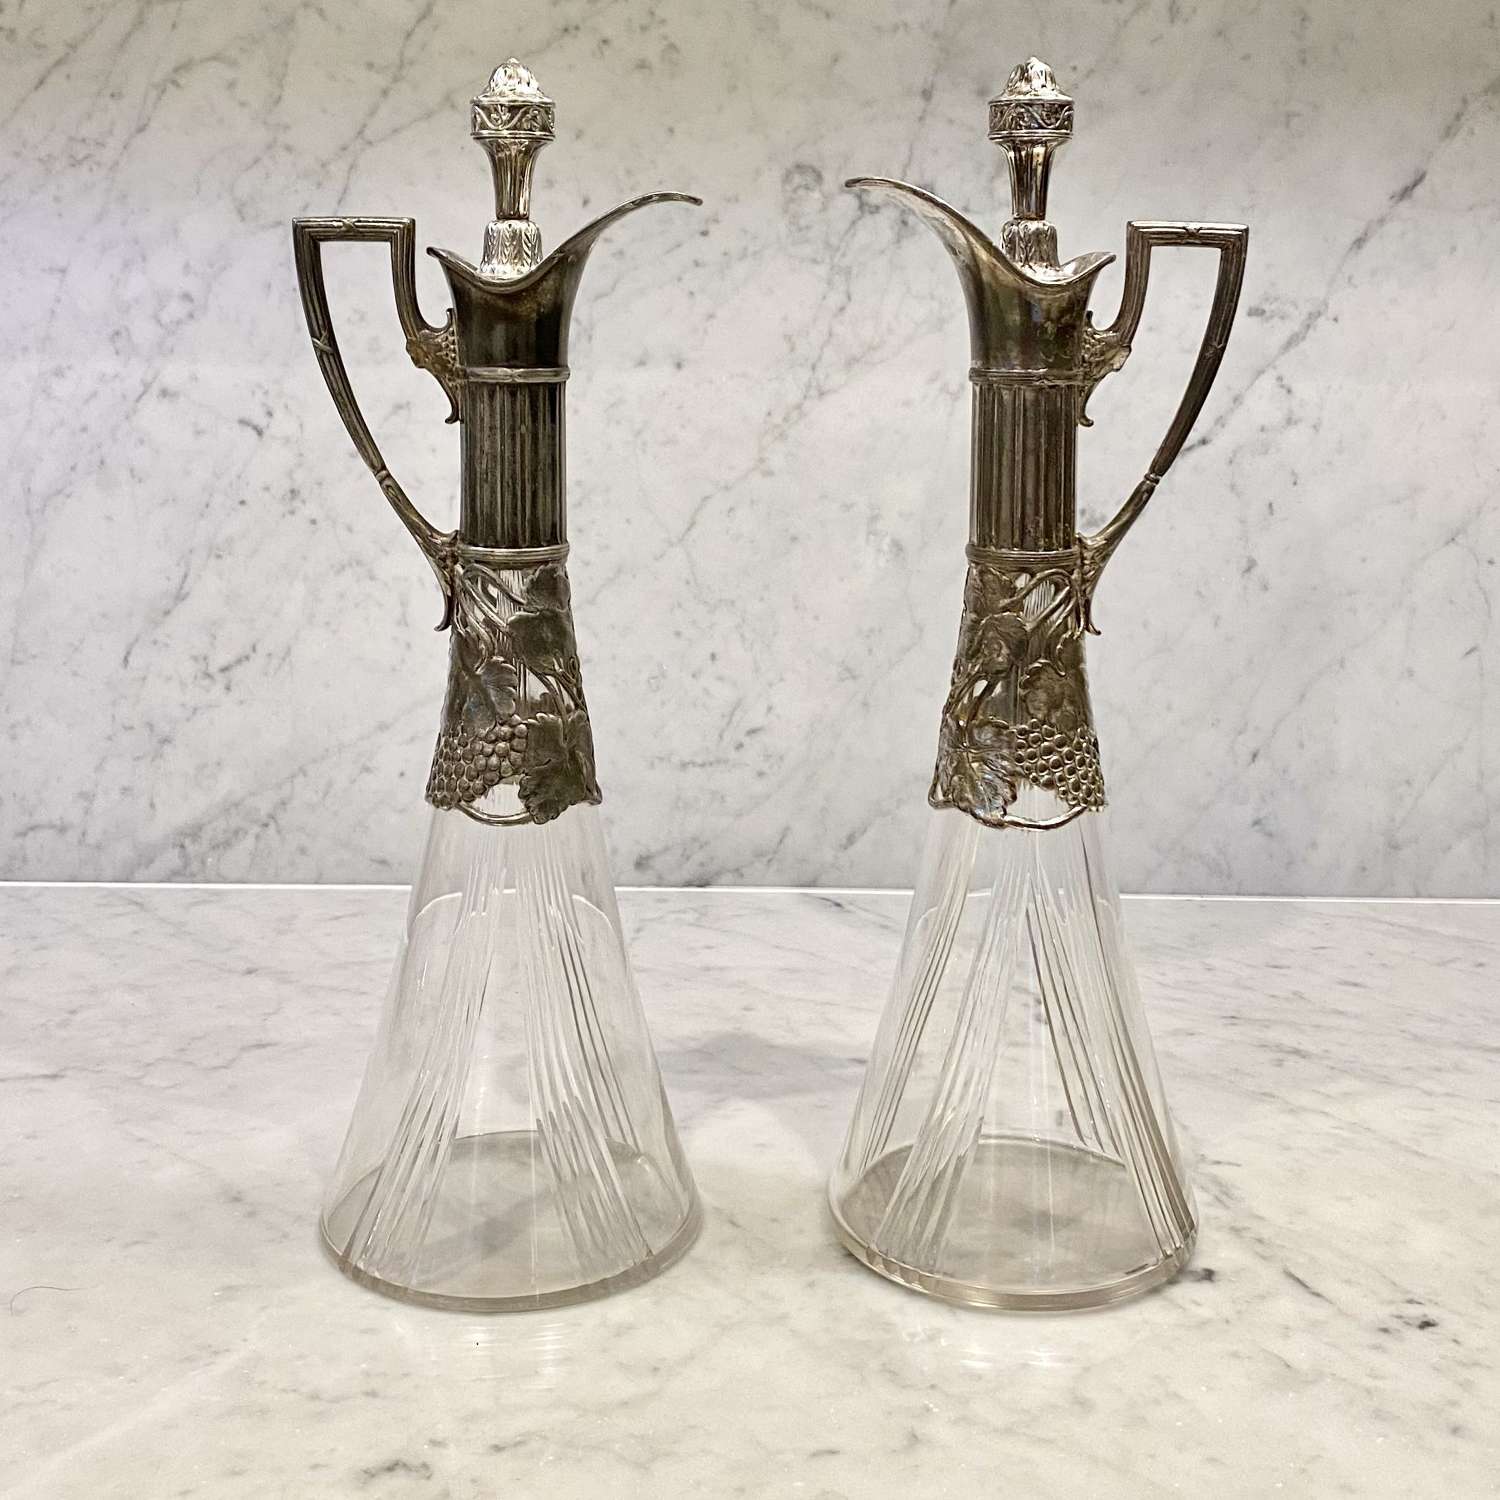 Secessionist Art Nouveau claret jug decanters